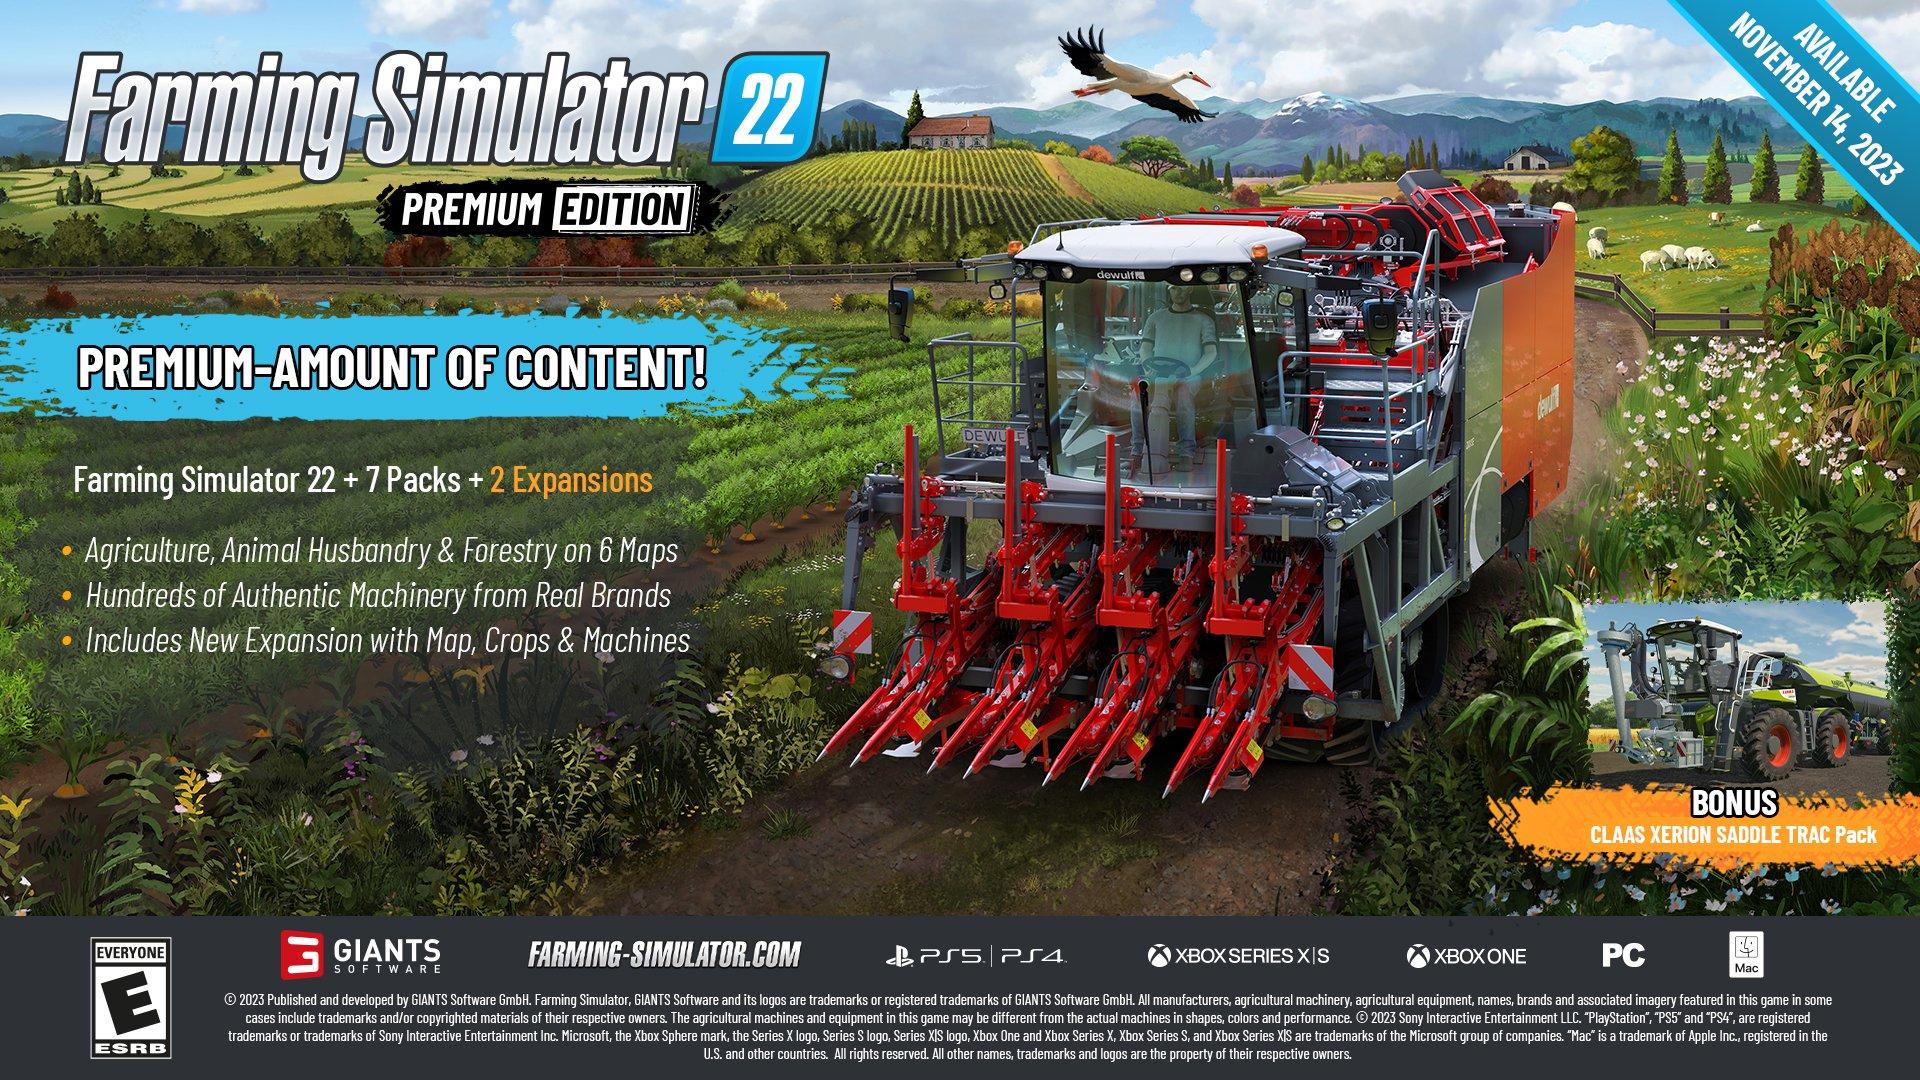 More Claas for Farming Simulator 20